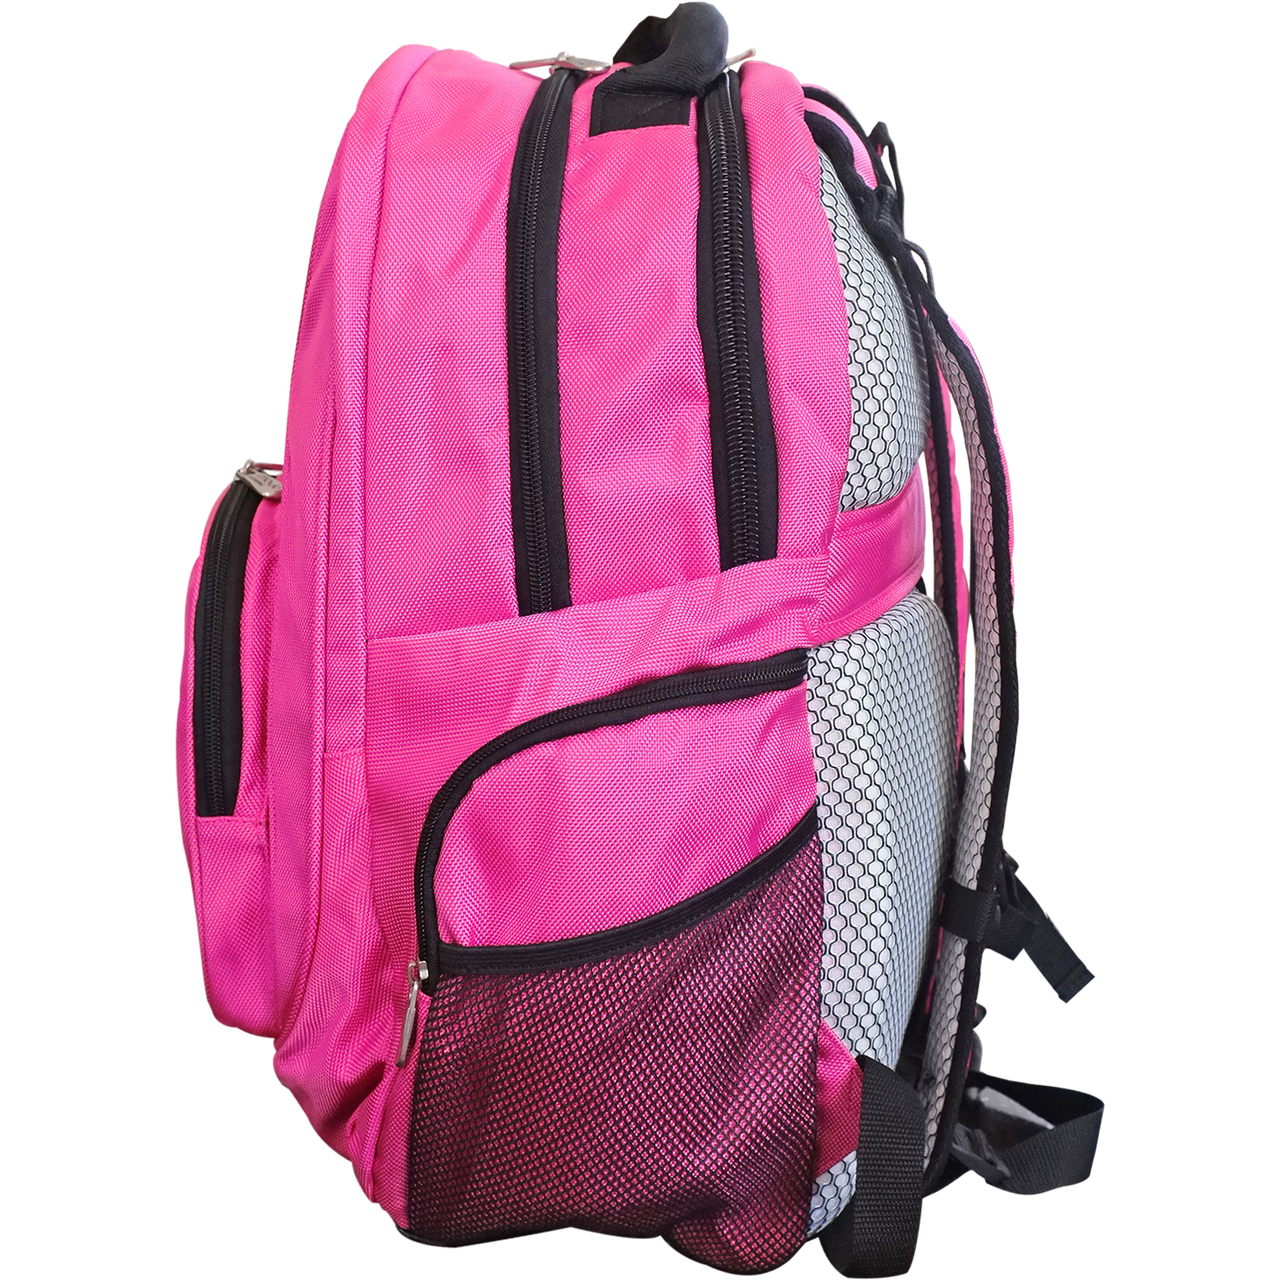 Cincinnati Reds Laptop Backpack Pink